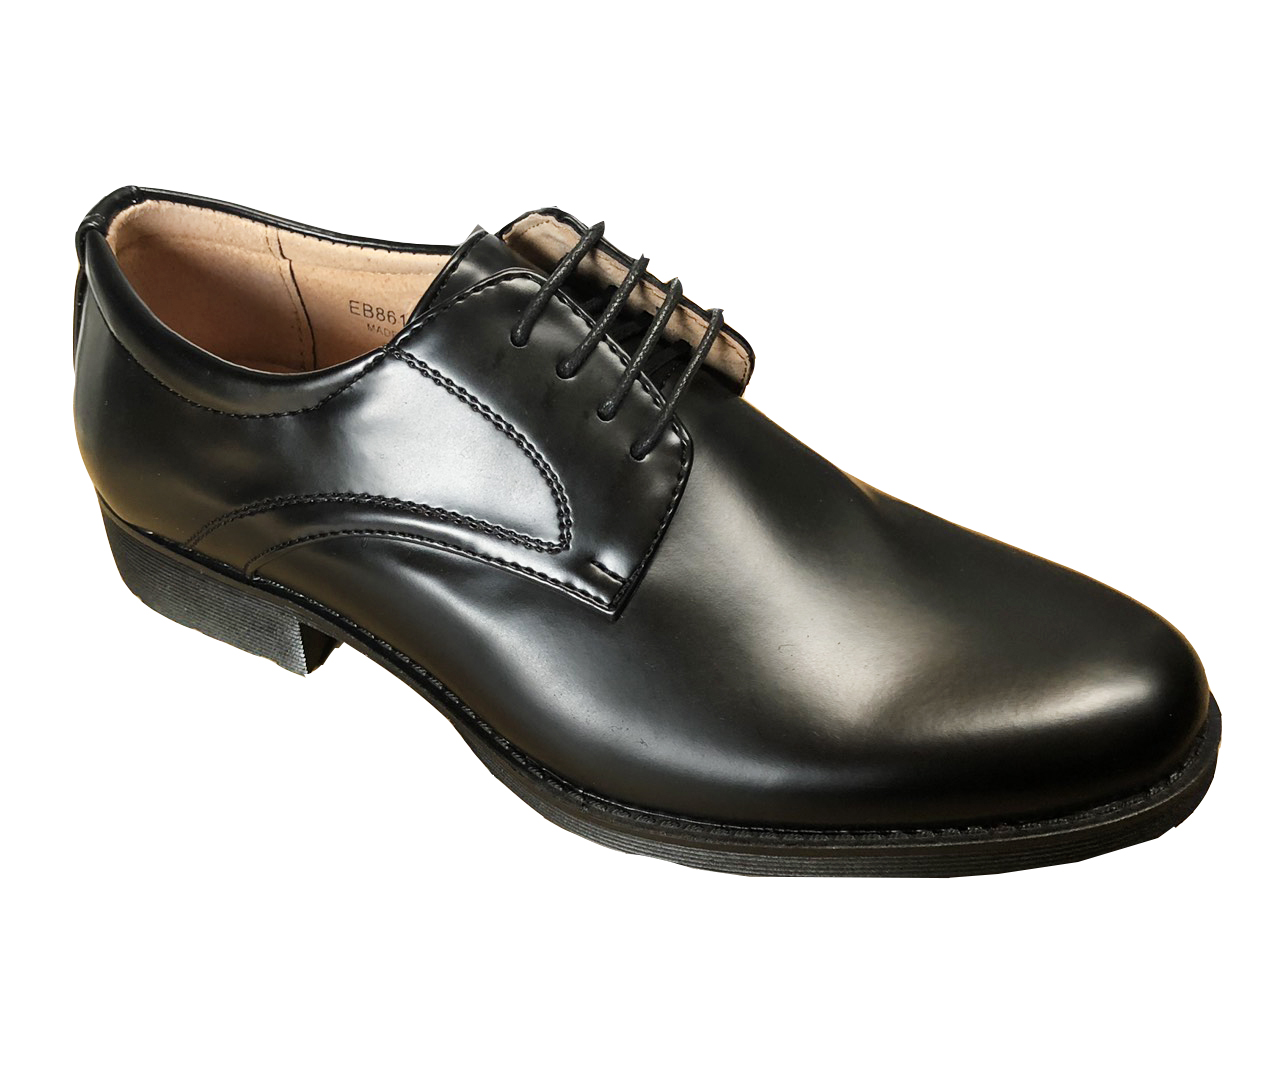 EB8612 學生皮鞋, 黑色-26cm, large